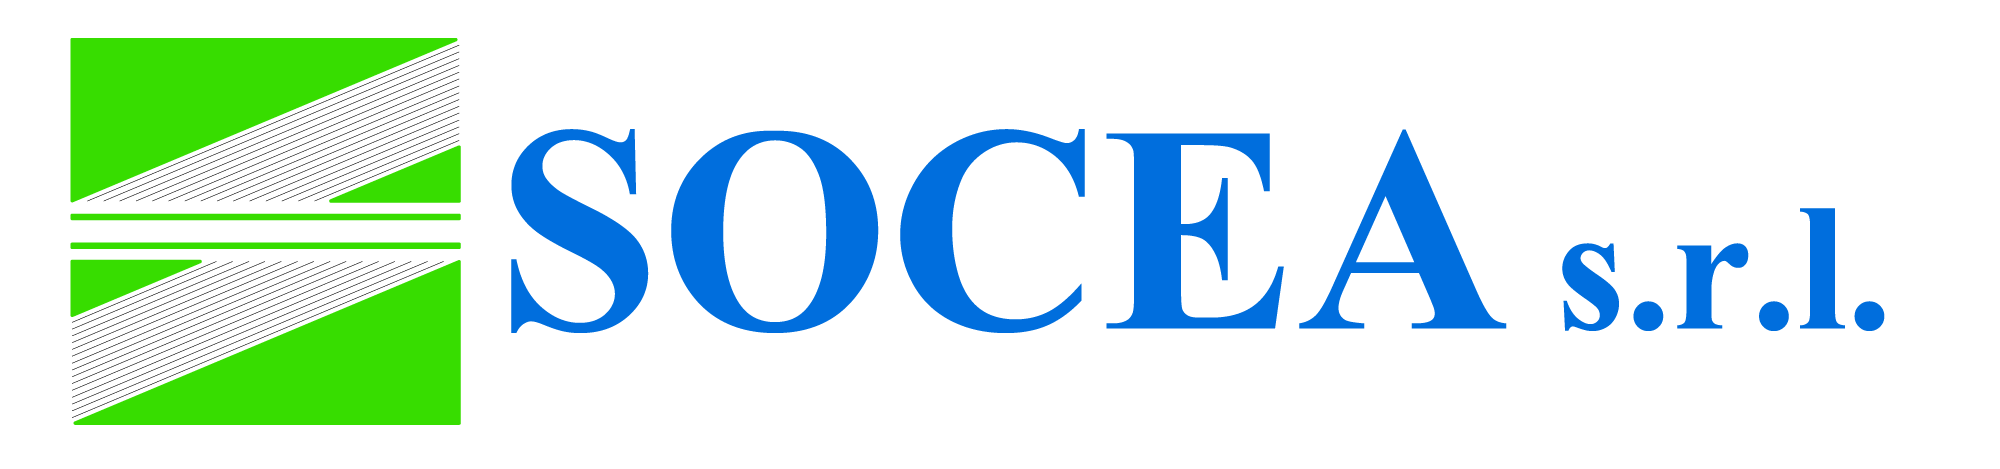 Logo Socea